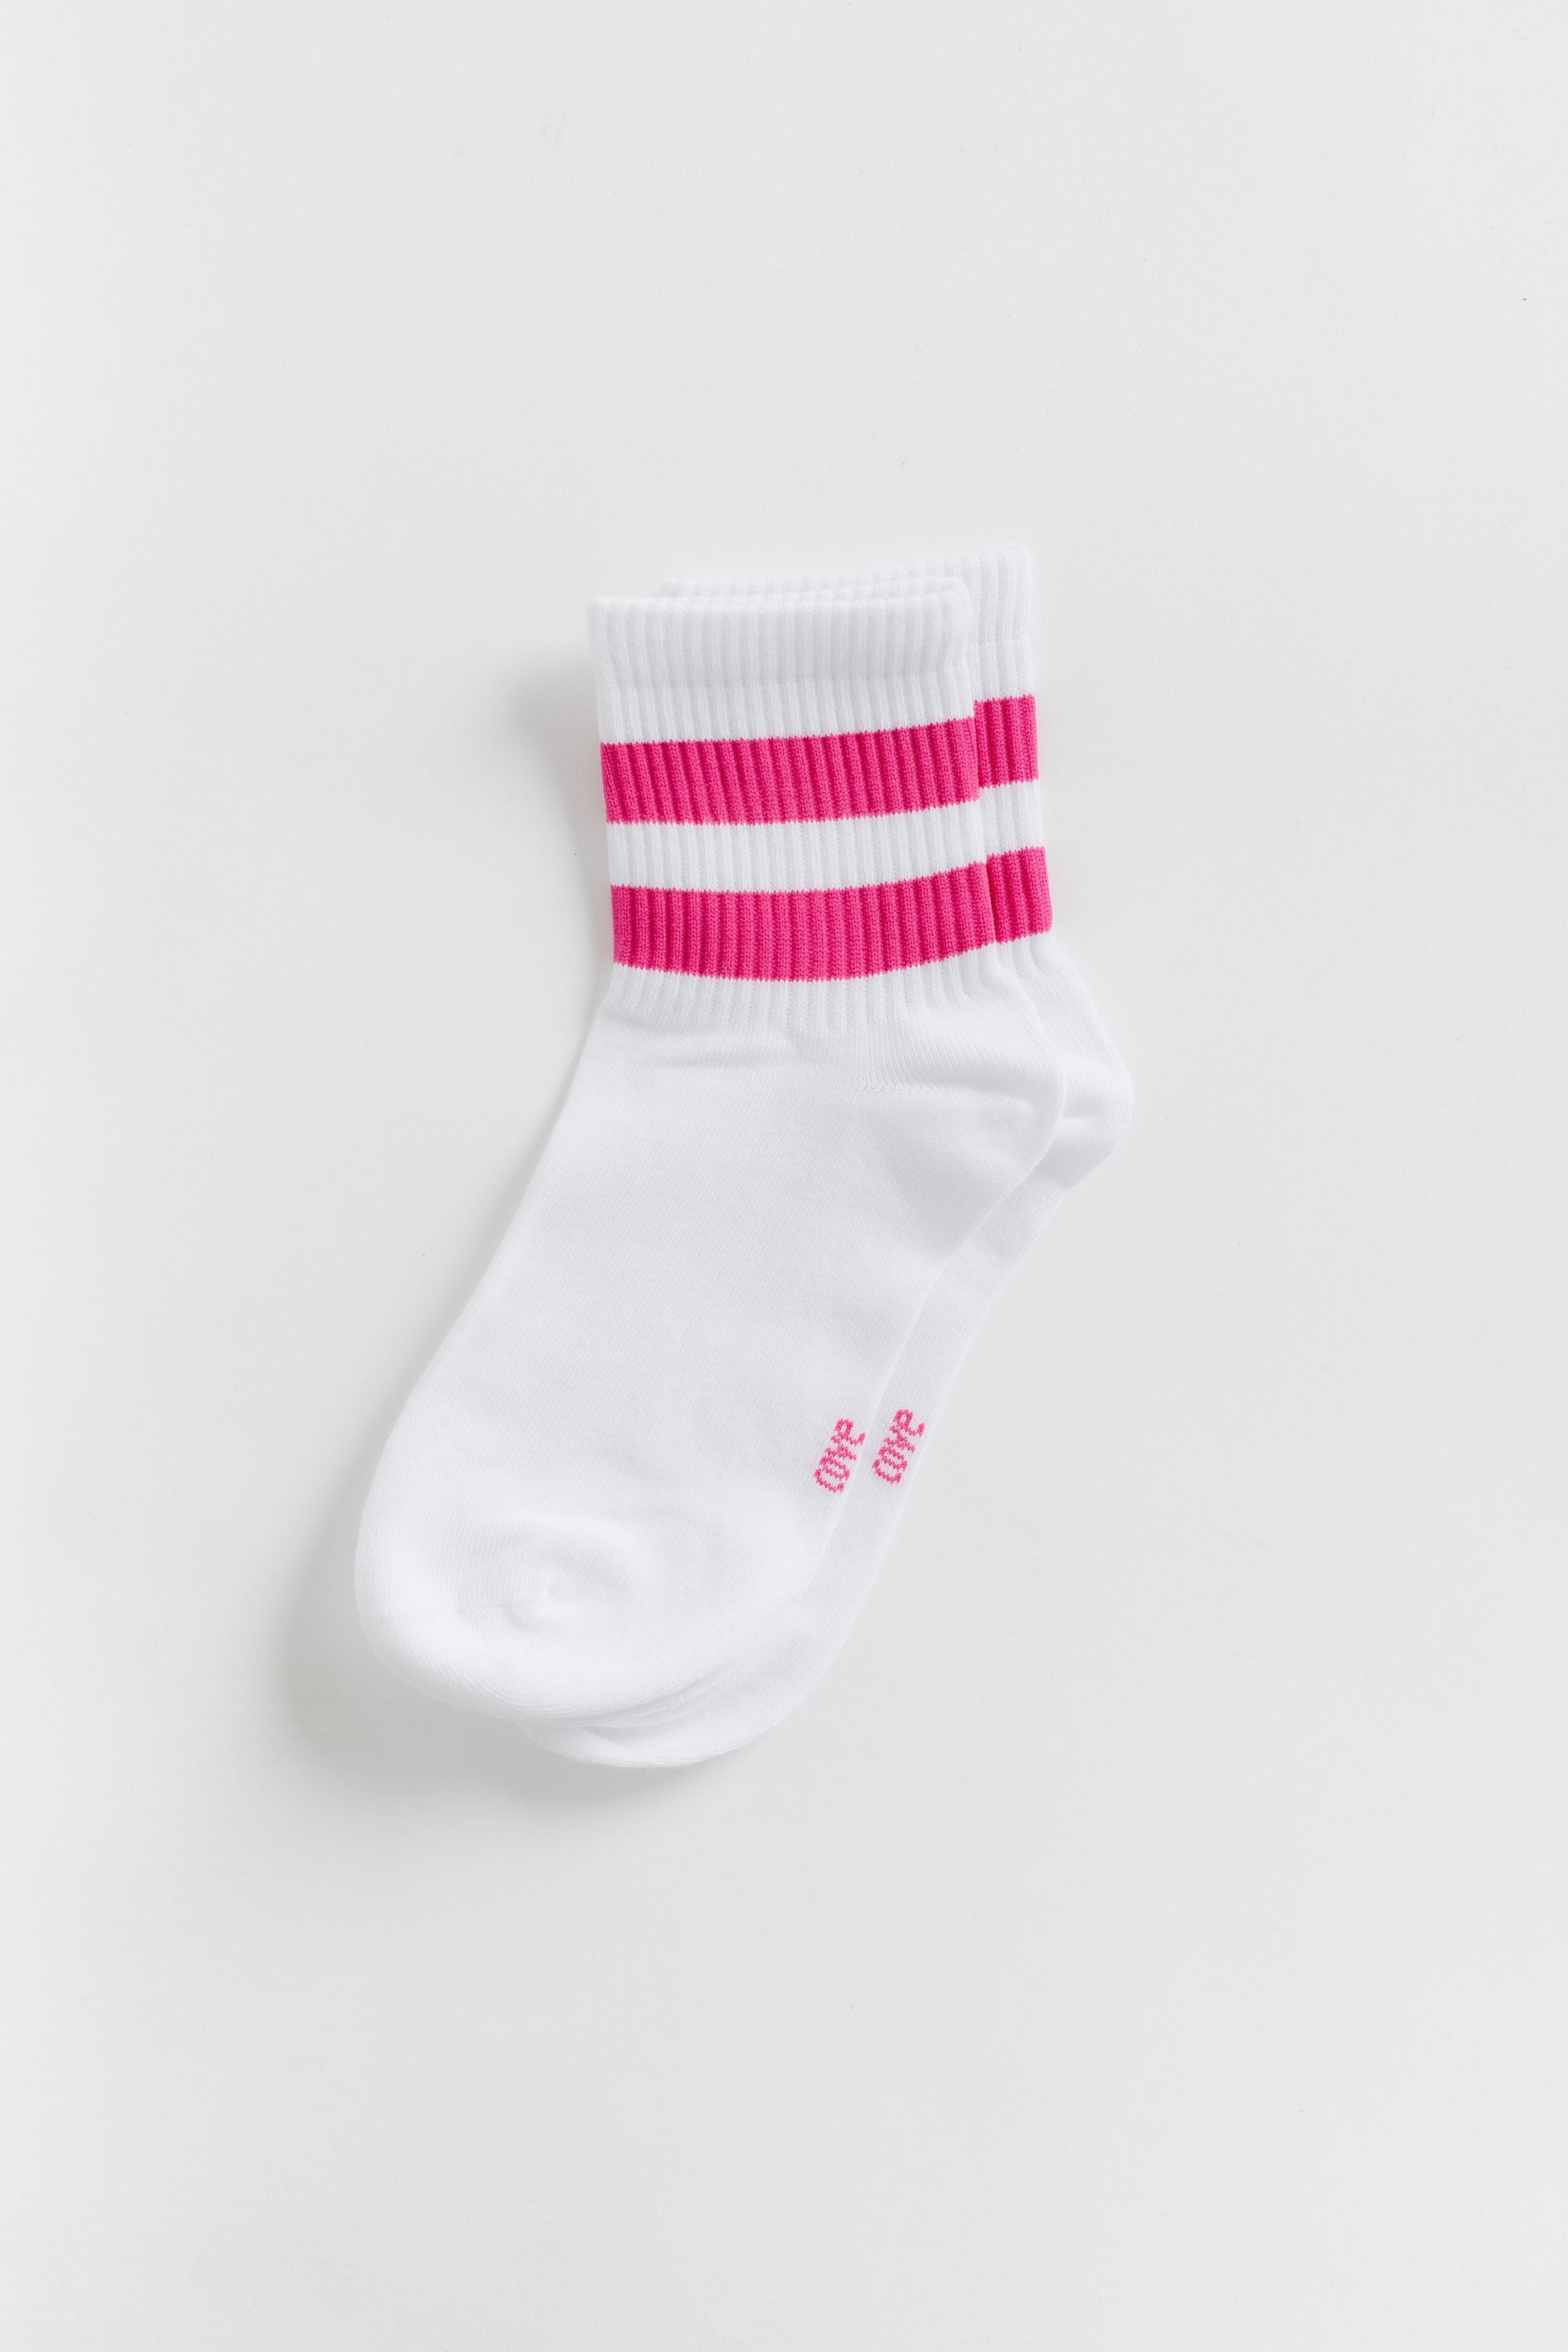 Cove Athletic Quarter Socks WOMEN'S SOCKS Cove Accessories Fuschia OS 